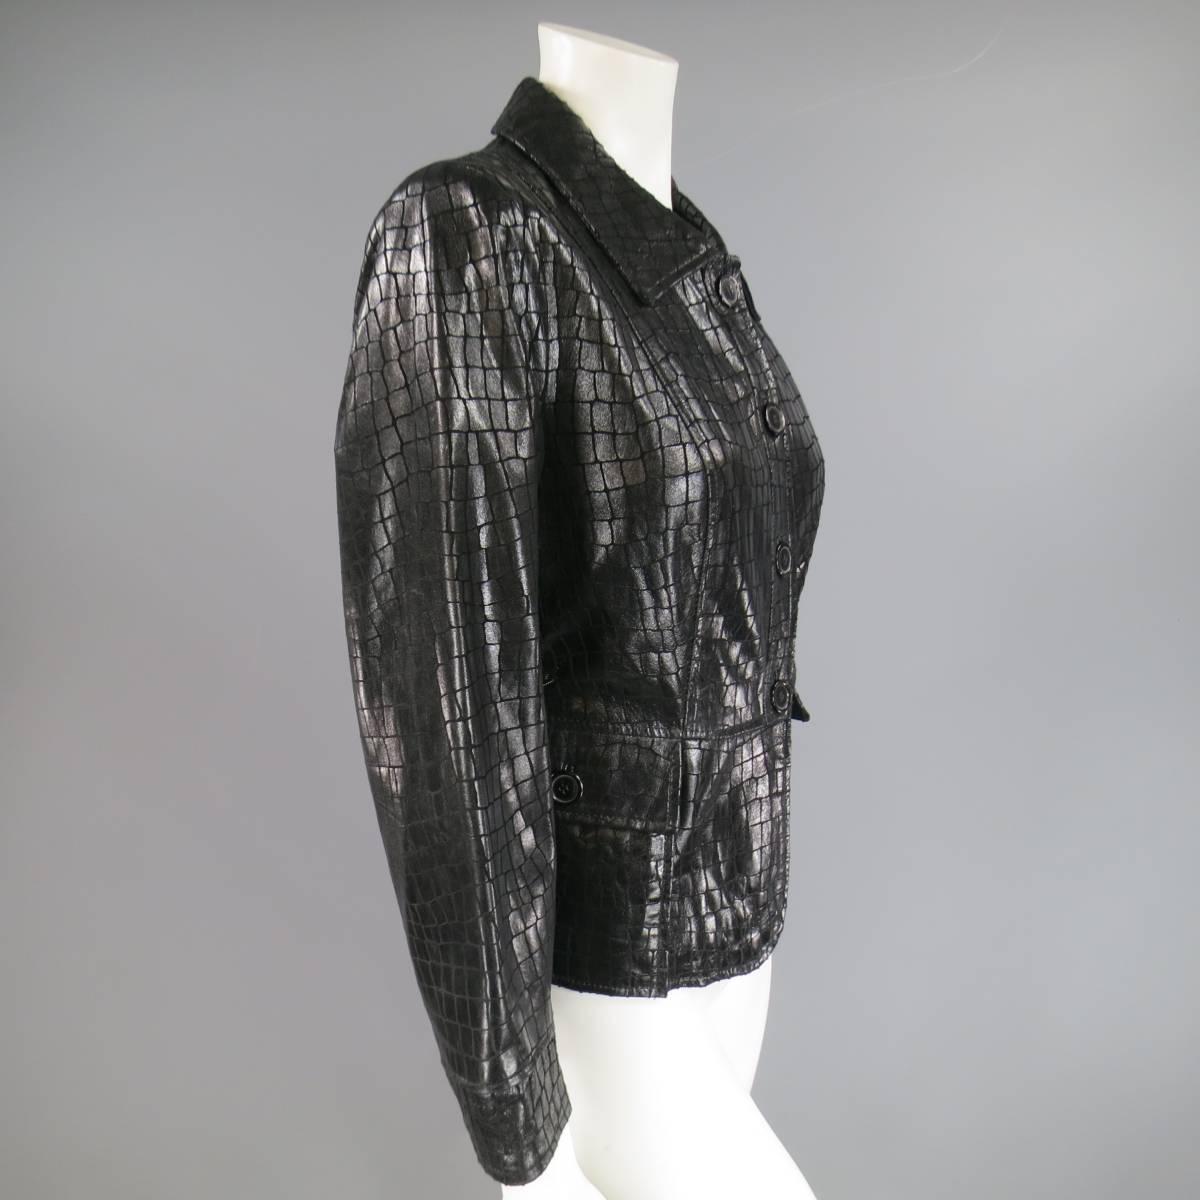 NEIMAN MARCUS Exclusive Size 8 Shiny Black Crocodile Leather Jacket at ...